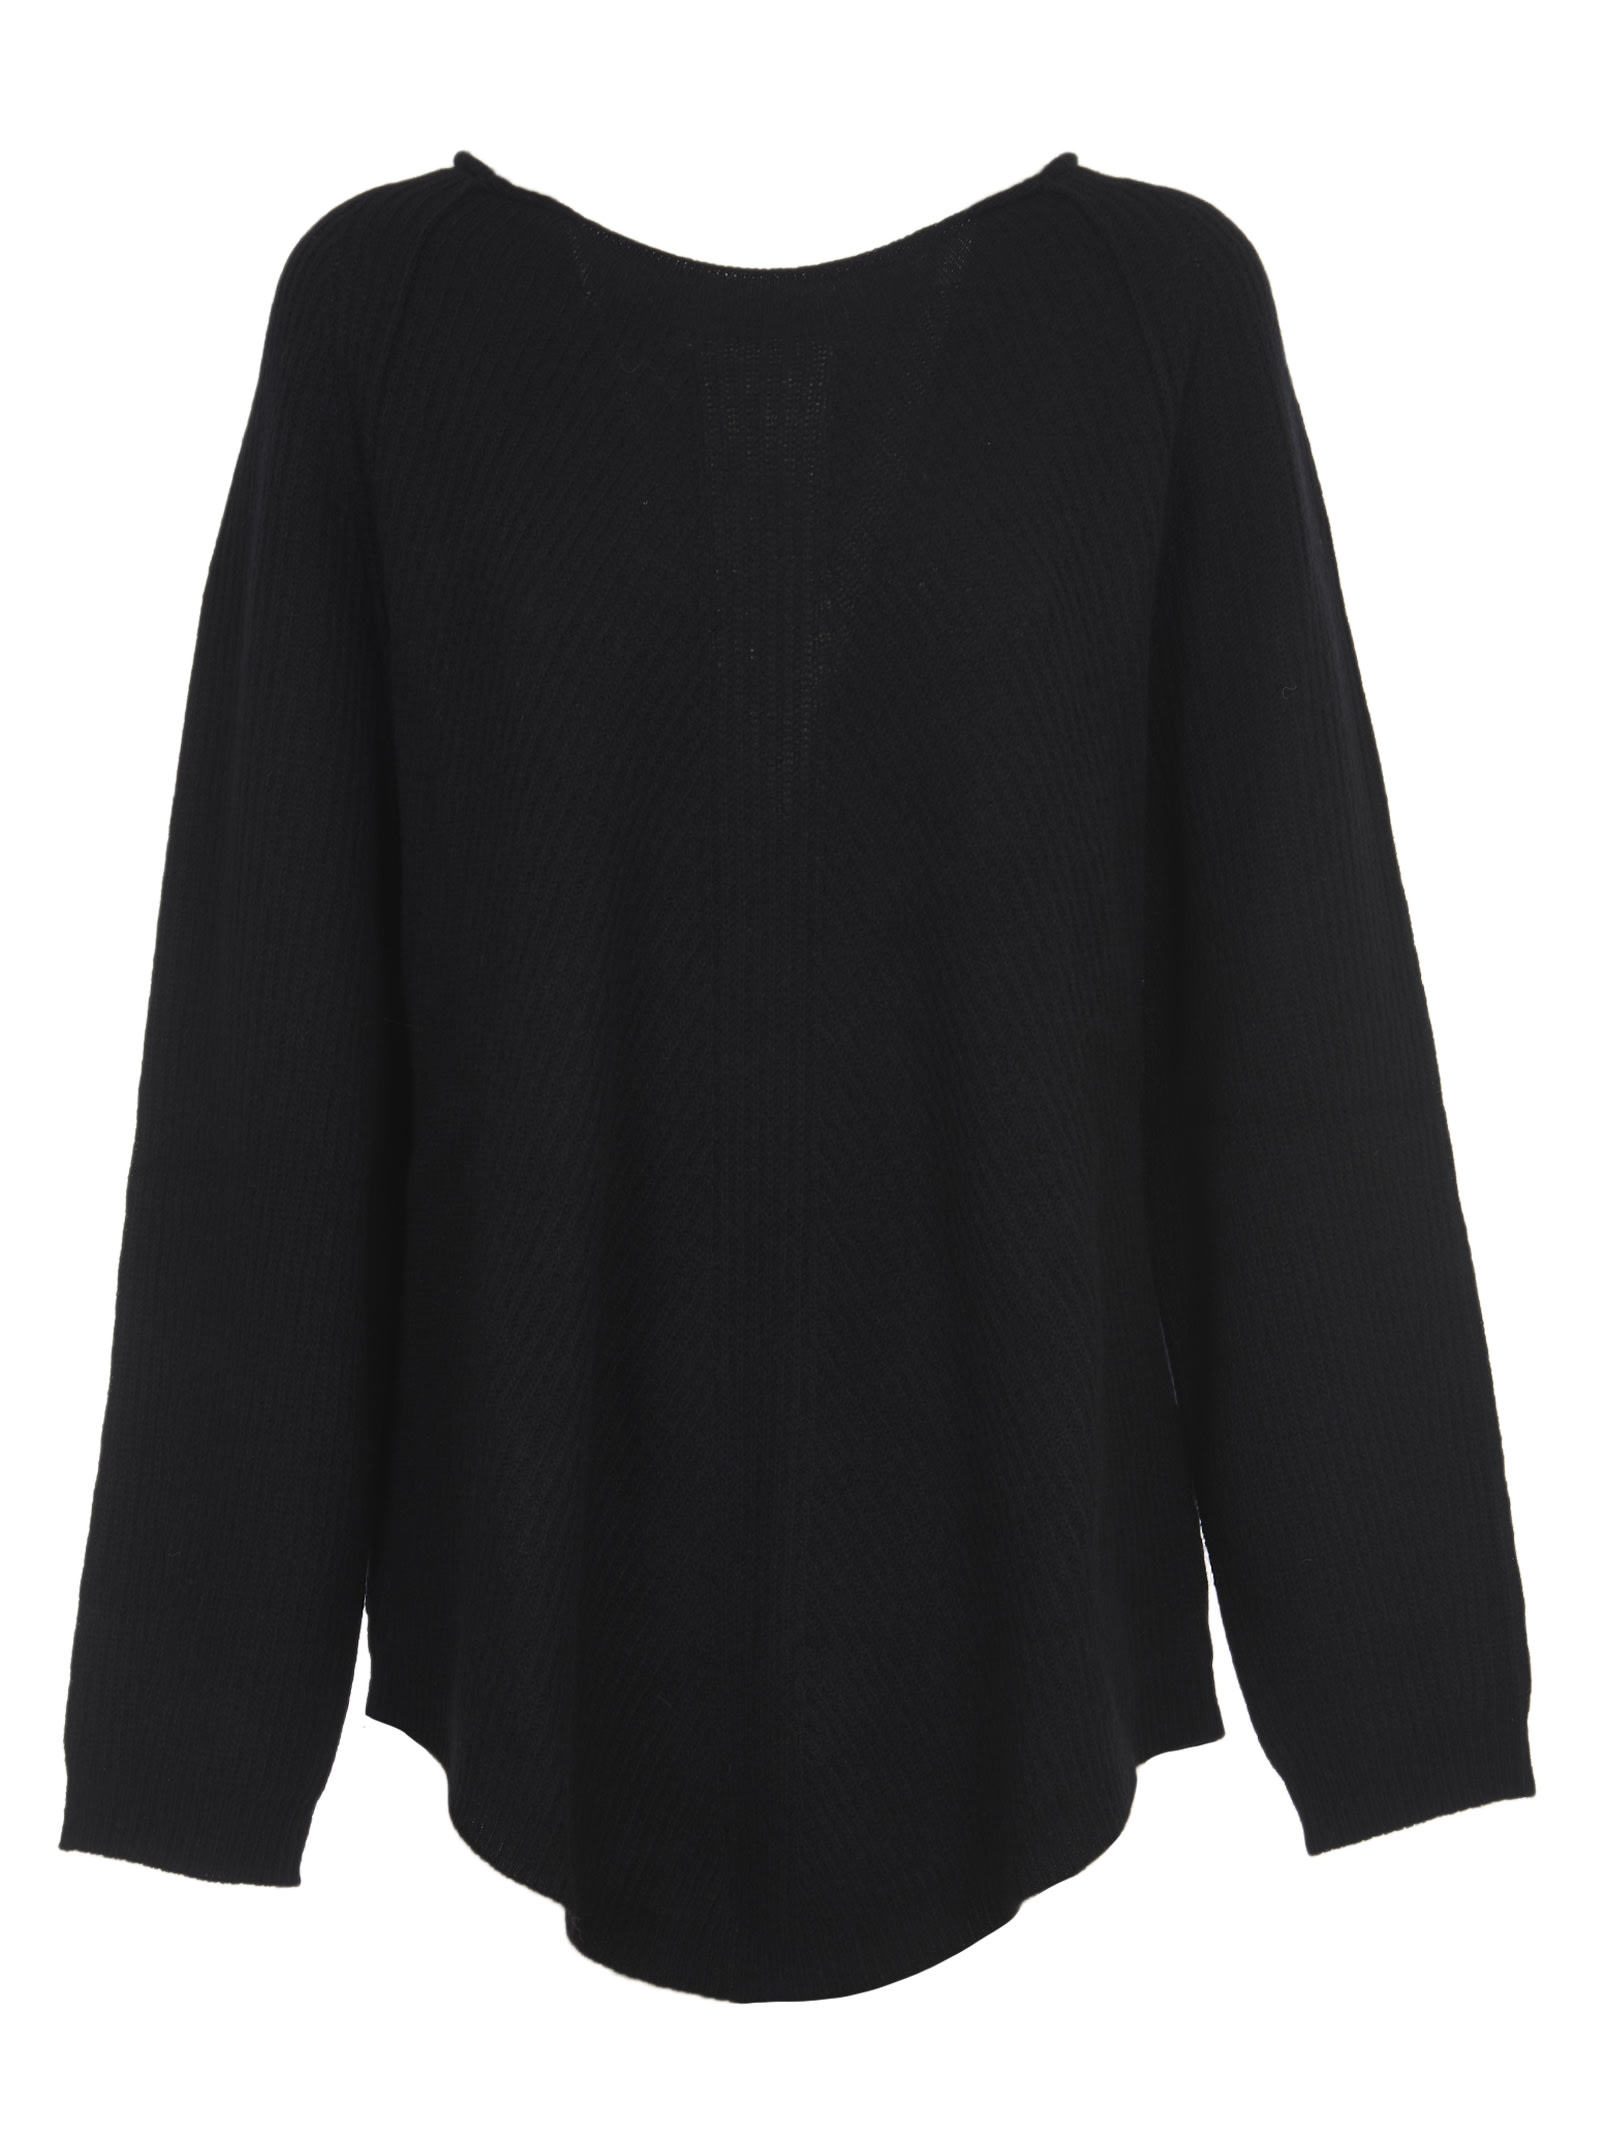 SEMICOUTURE Asymmetrical Black Wool Sweater